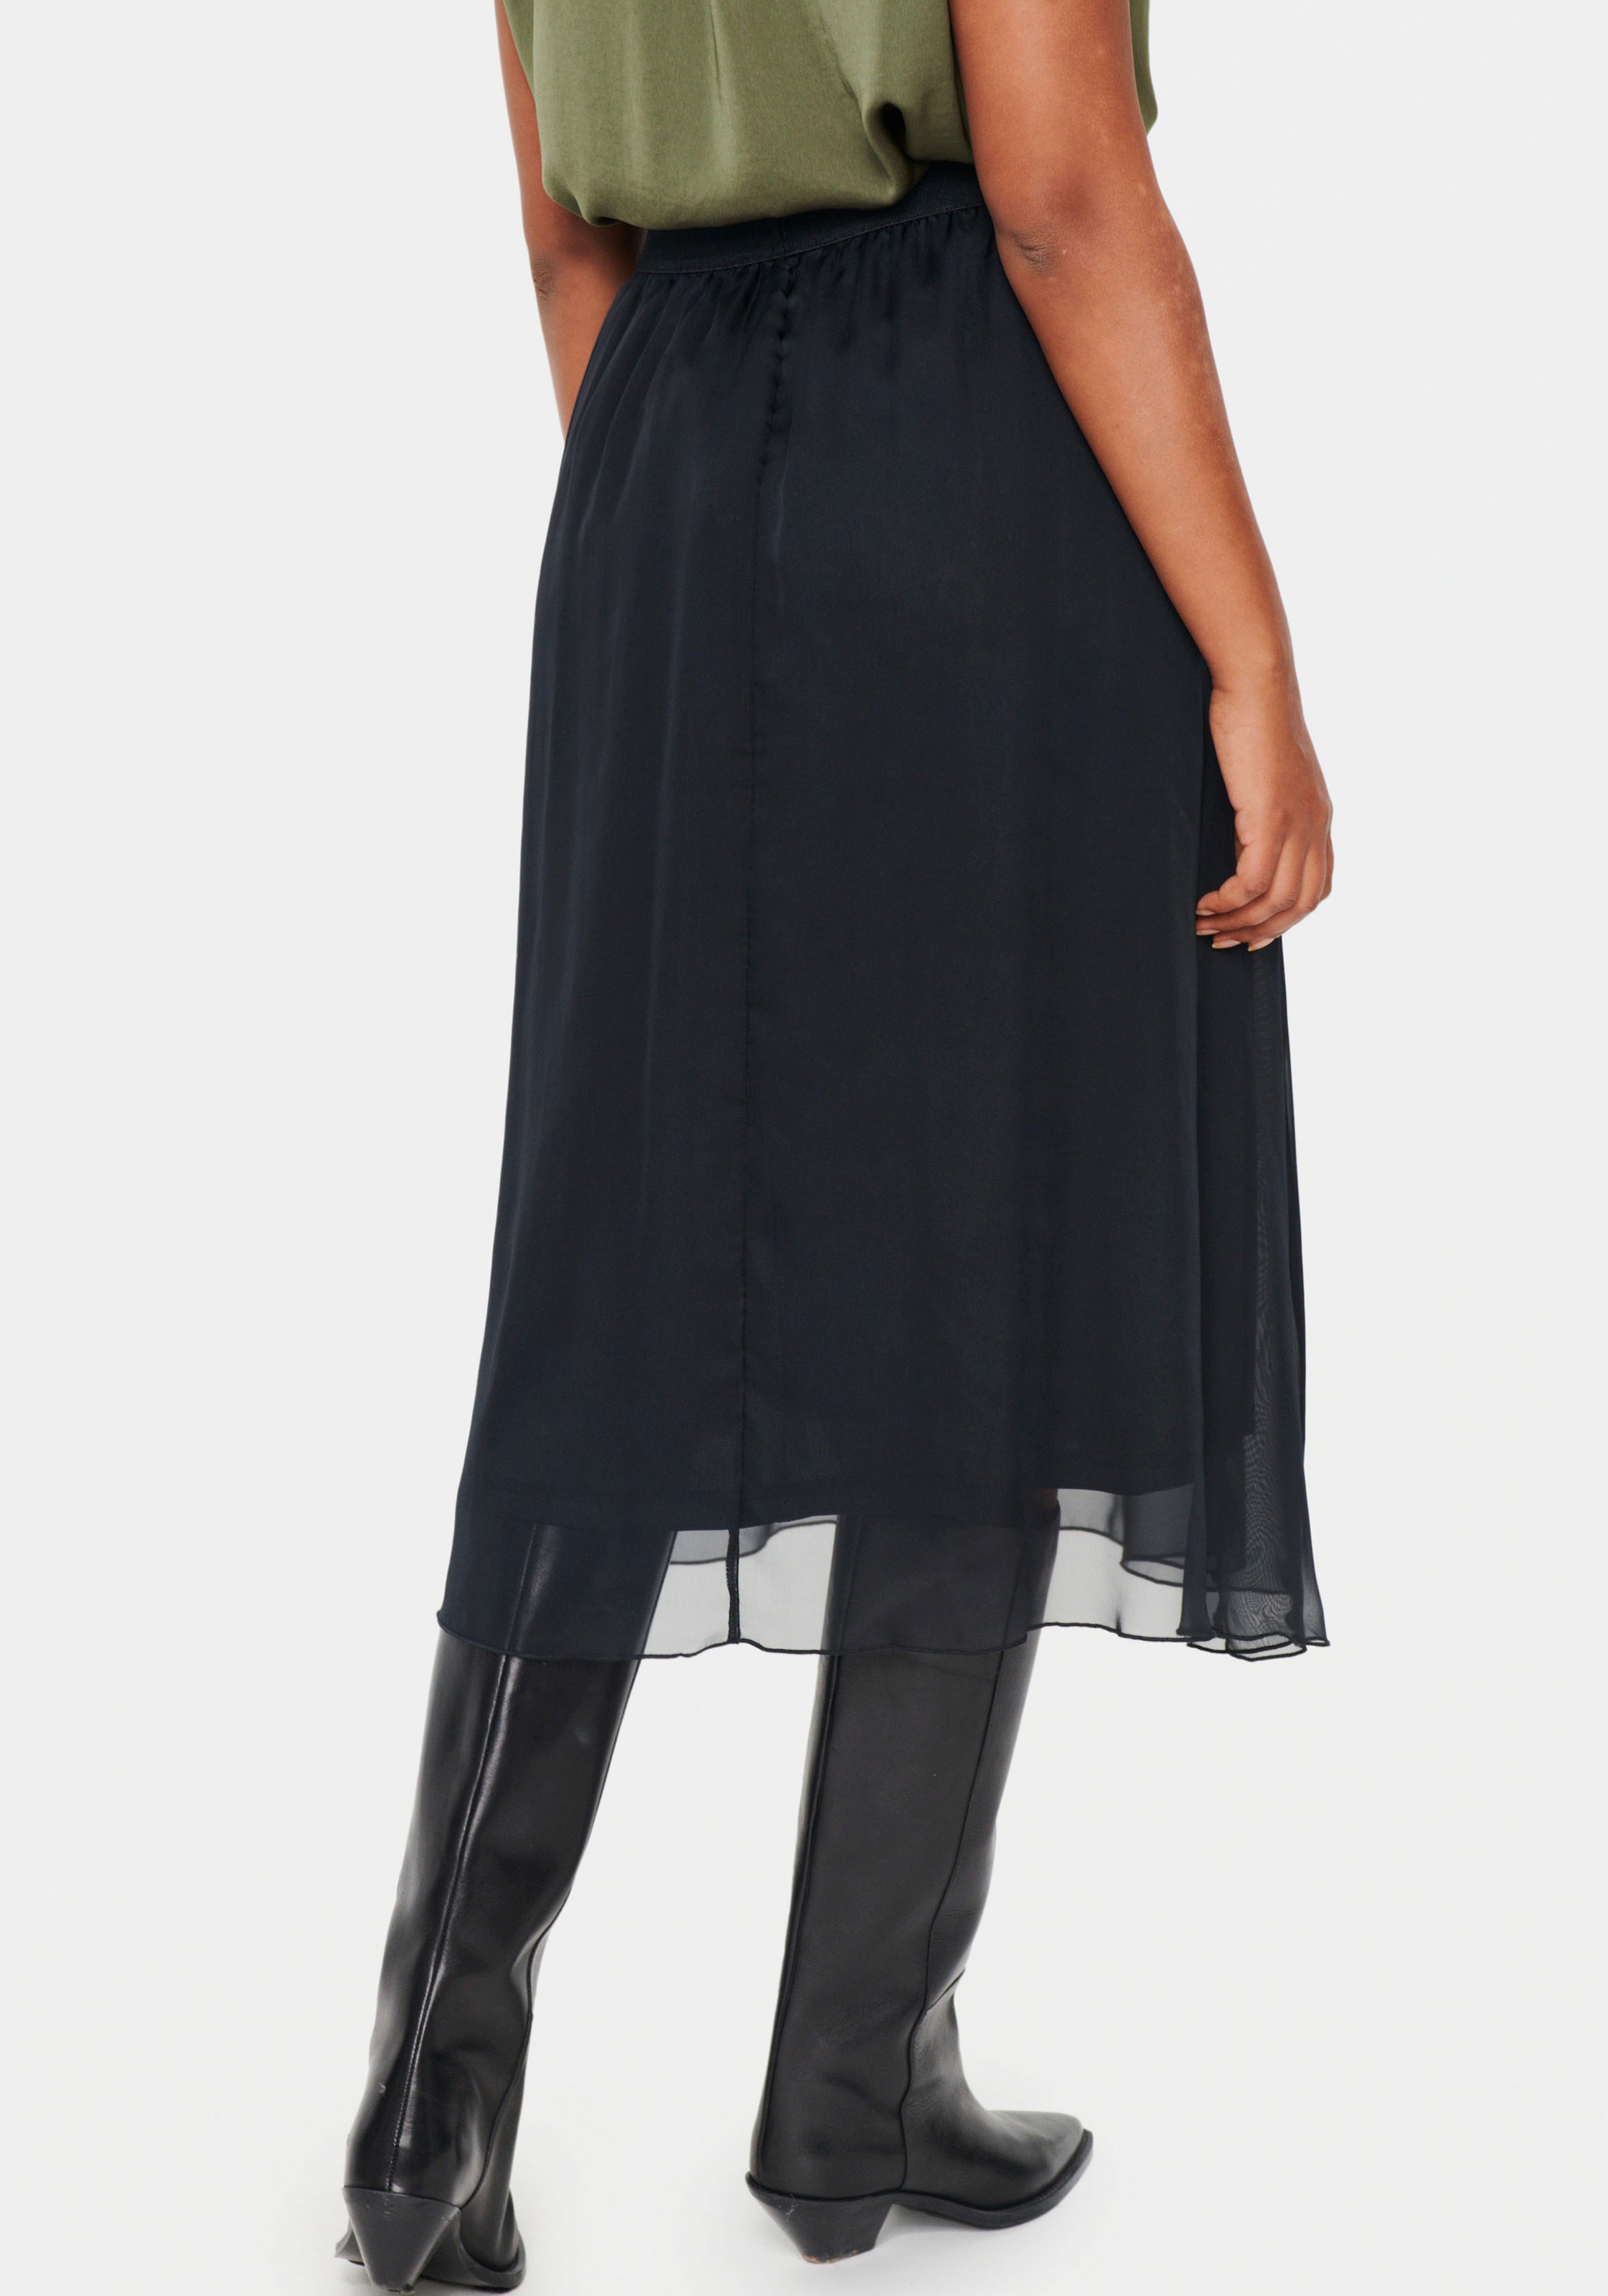 OTTO Shop Tropez im Online »CoralSZ Maxirock Skirt« Saint bestellen